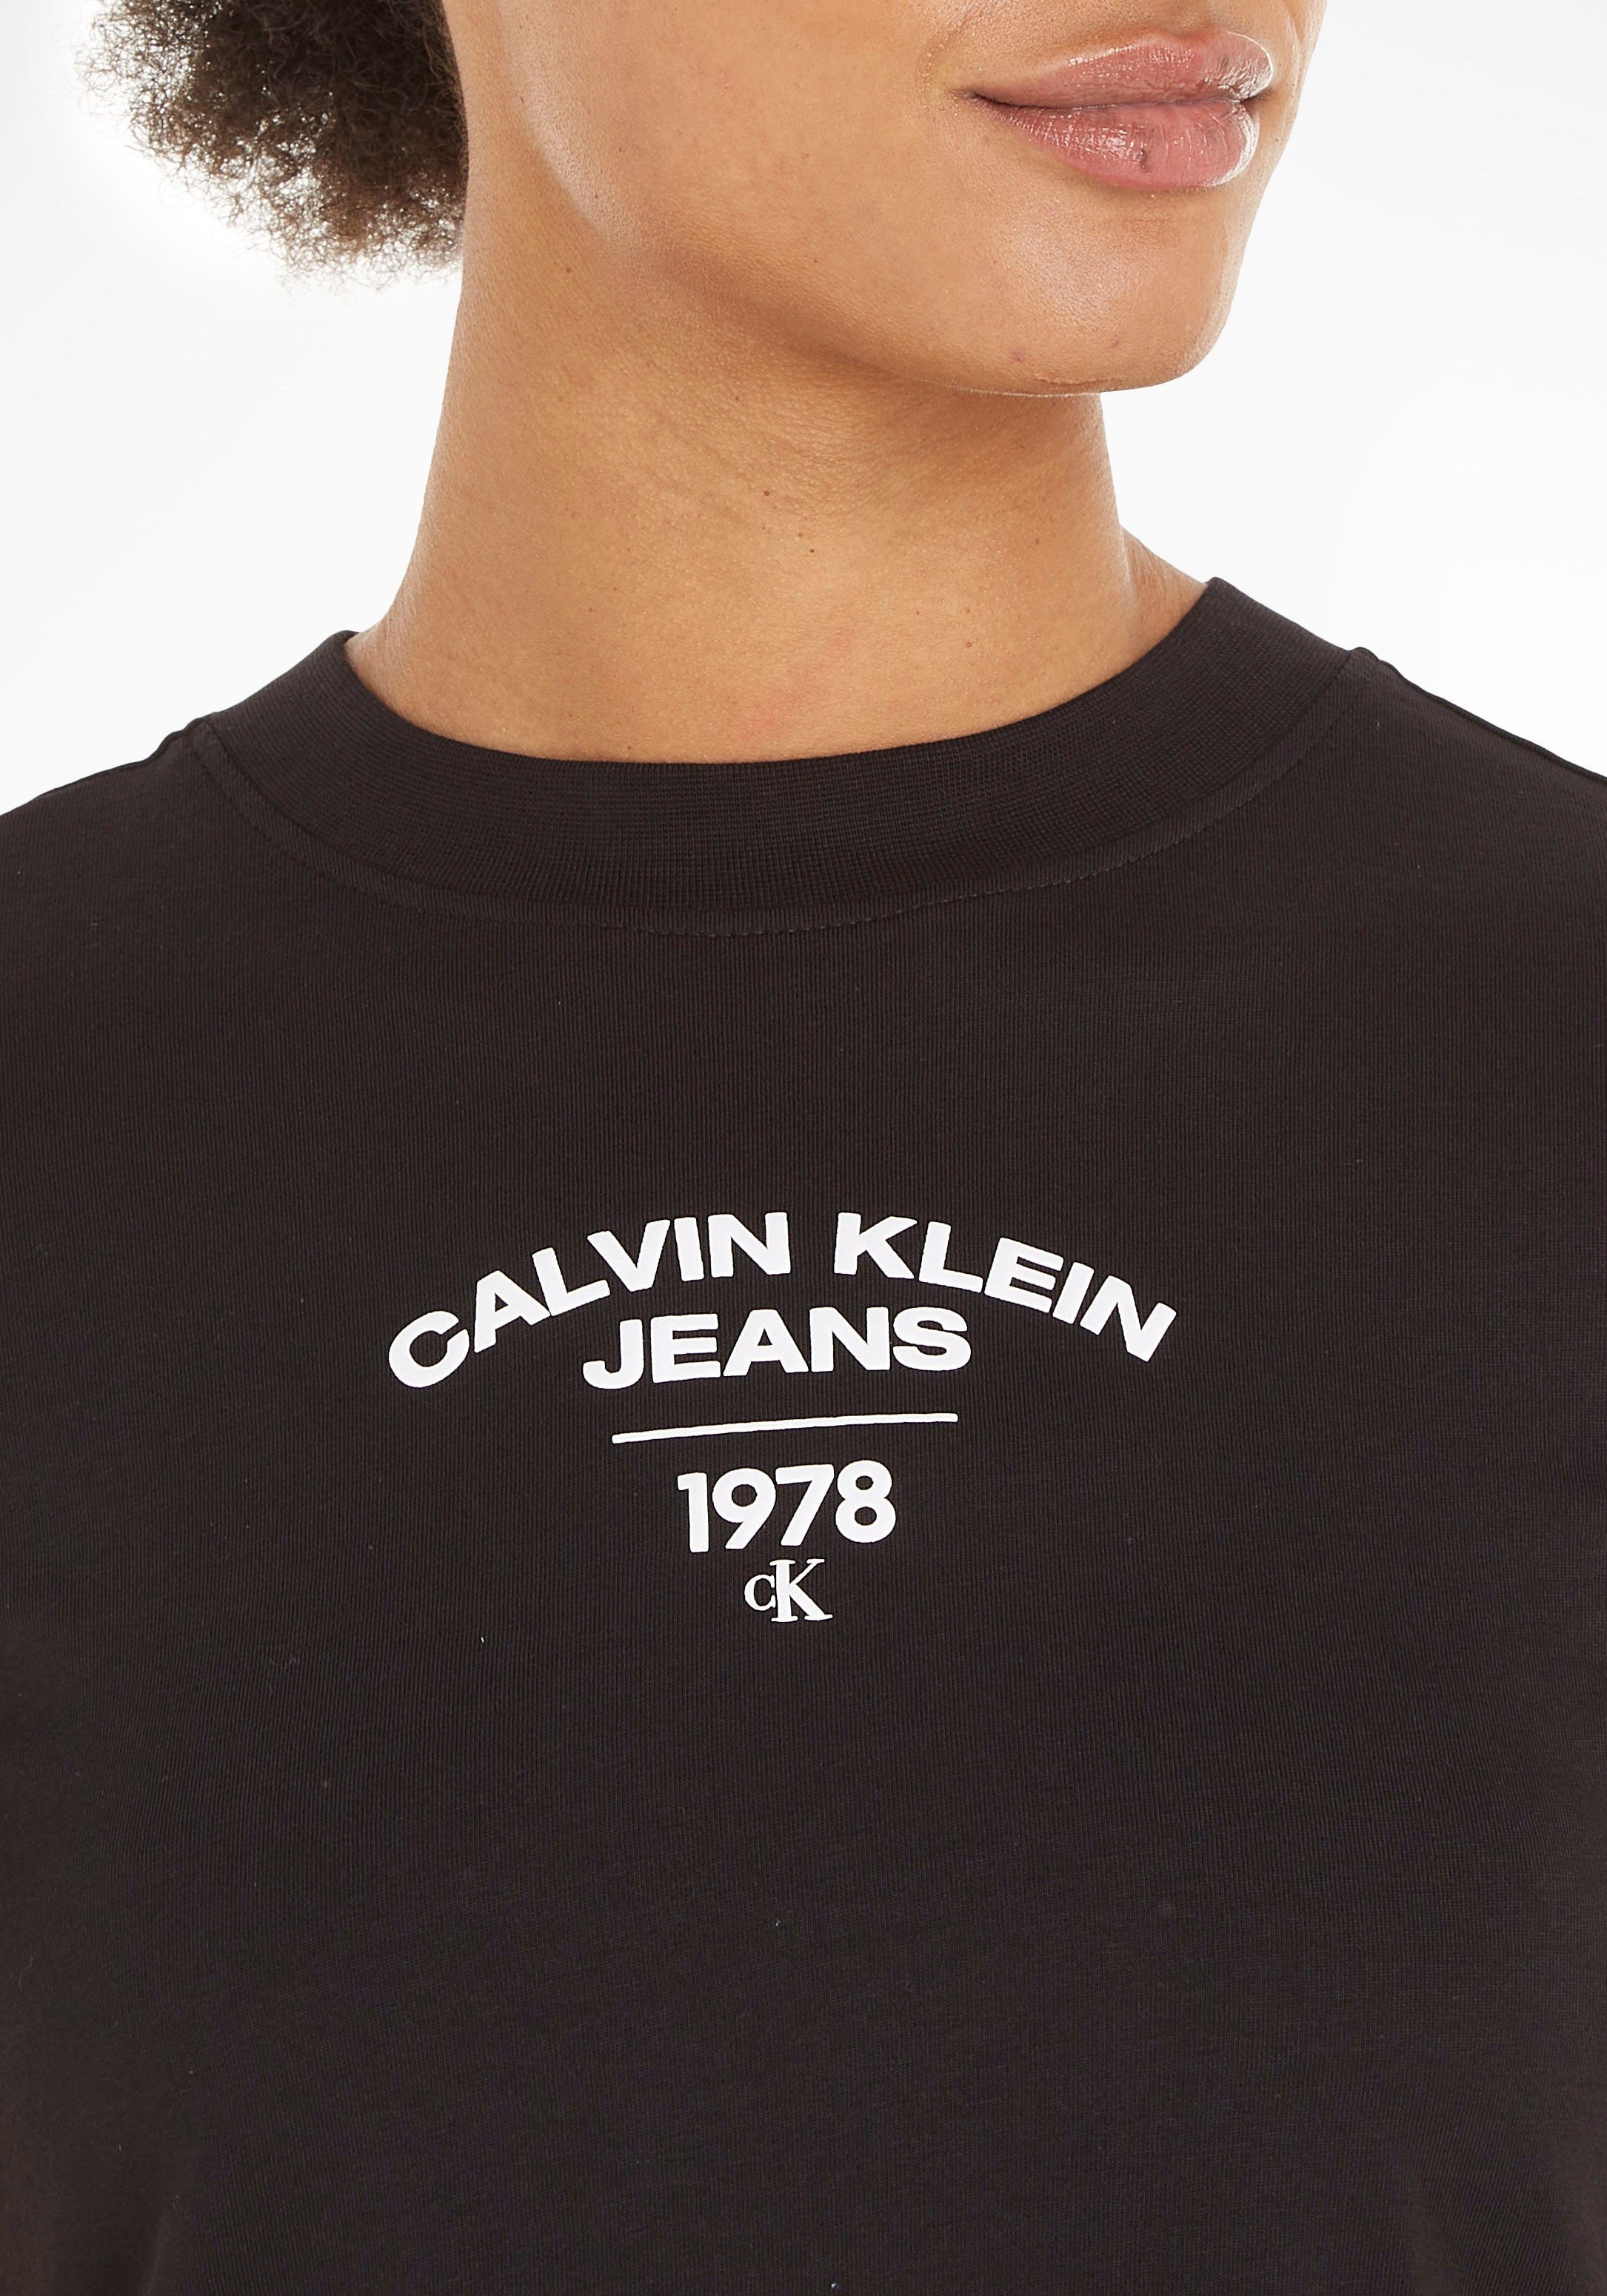 TEE Ck BABY Jeans Calvin LOGO Black VARSITY Klein T-Shirt